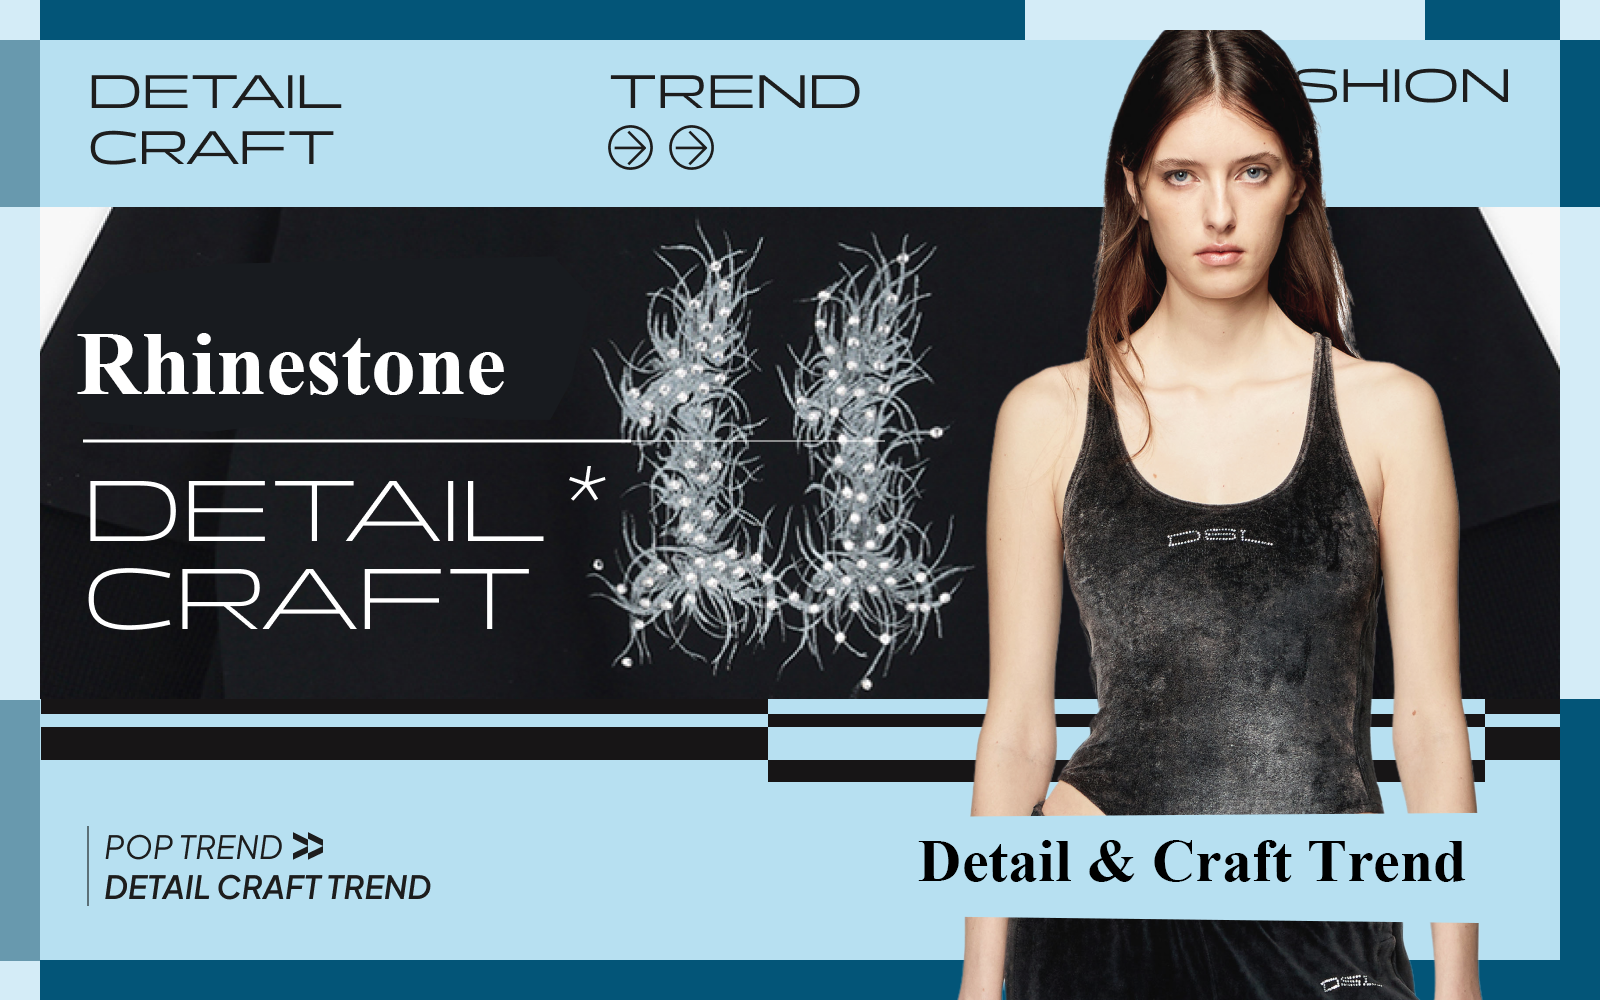 Rhinestone -- The Pattern Craft Trend for Womenswear